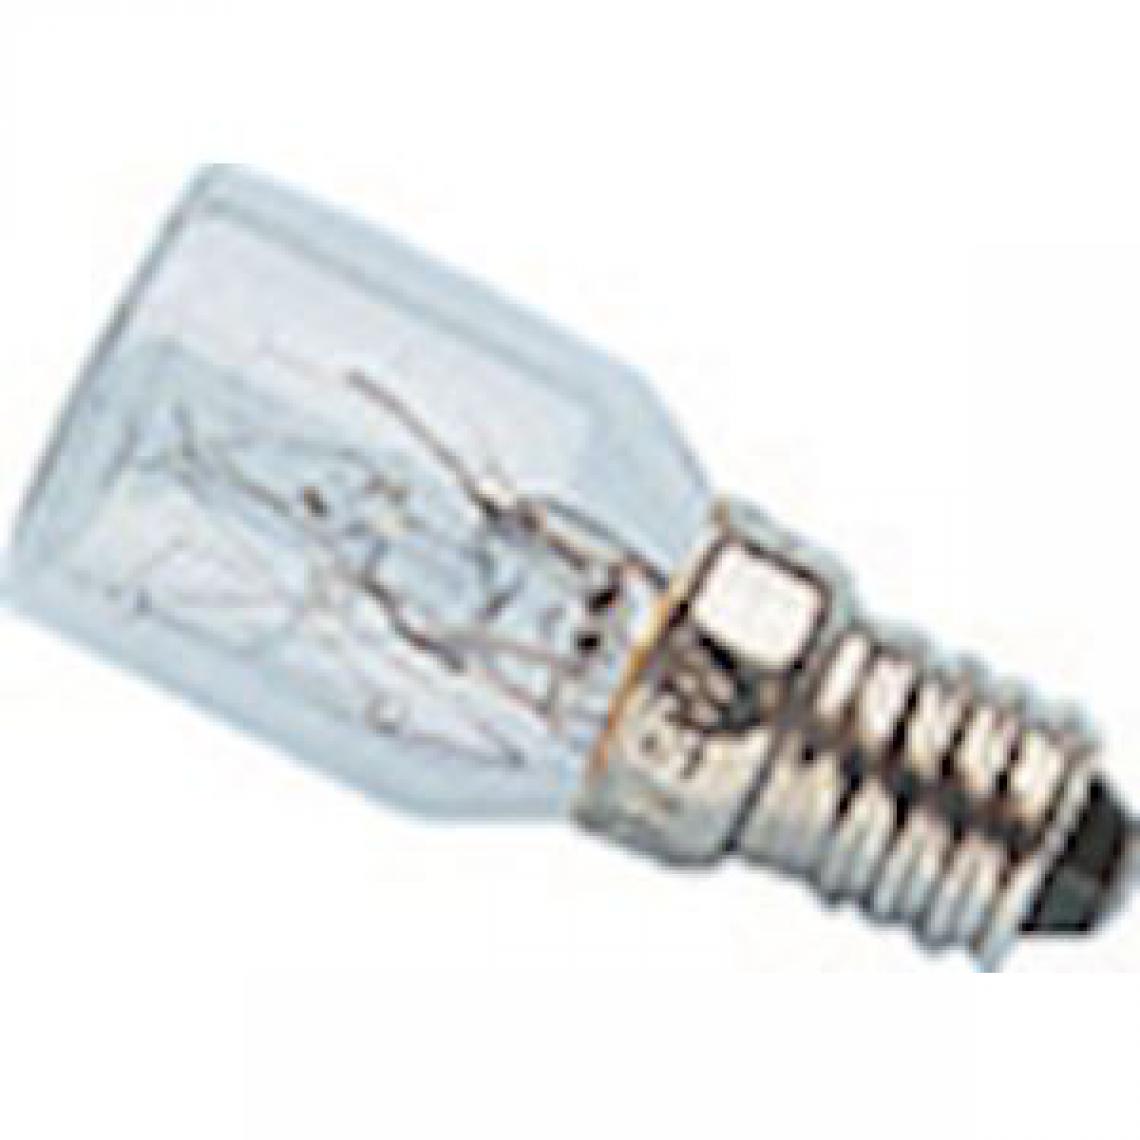 Orbitec - lampe miniature - e10 - 16 x 35 - 24 volts - 5 watts - orbitec 117003 - Ampoules LED